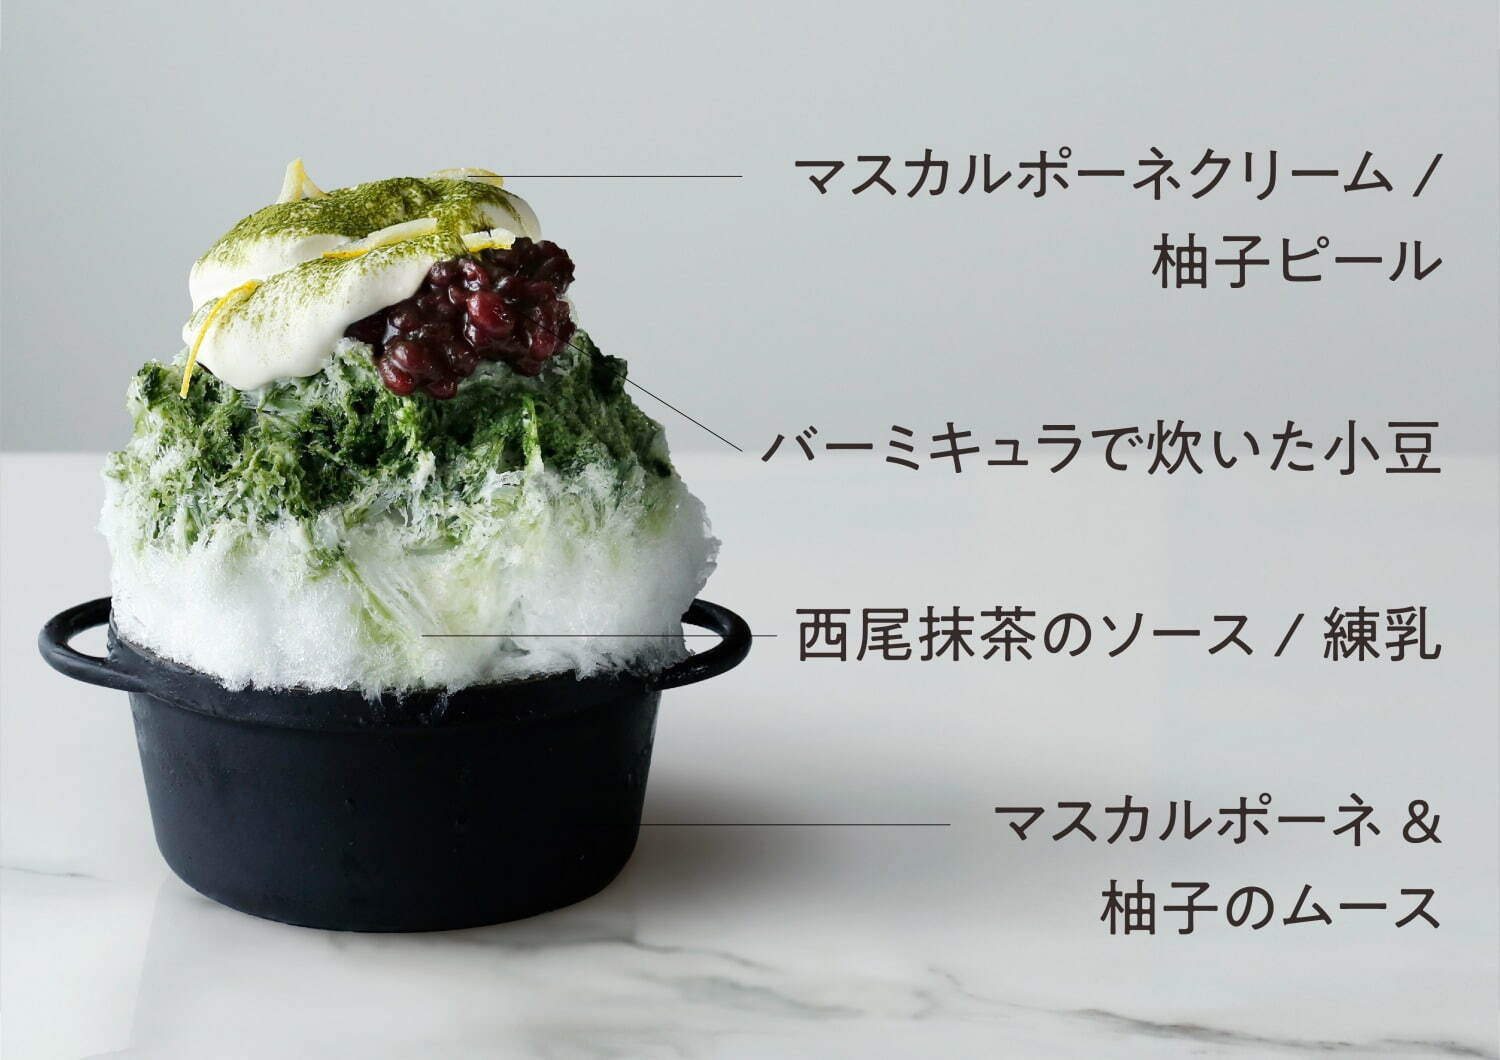 “Vermicula冰壶Uguisu”1,600日元